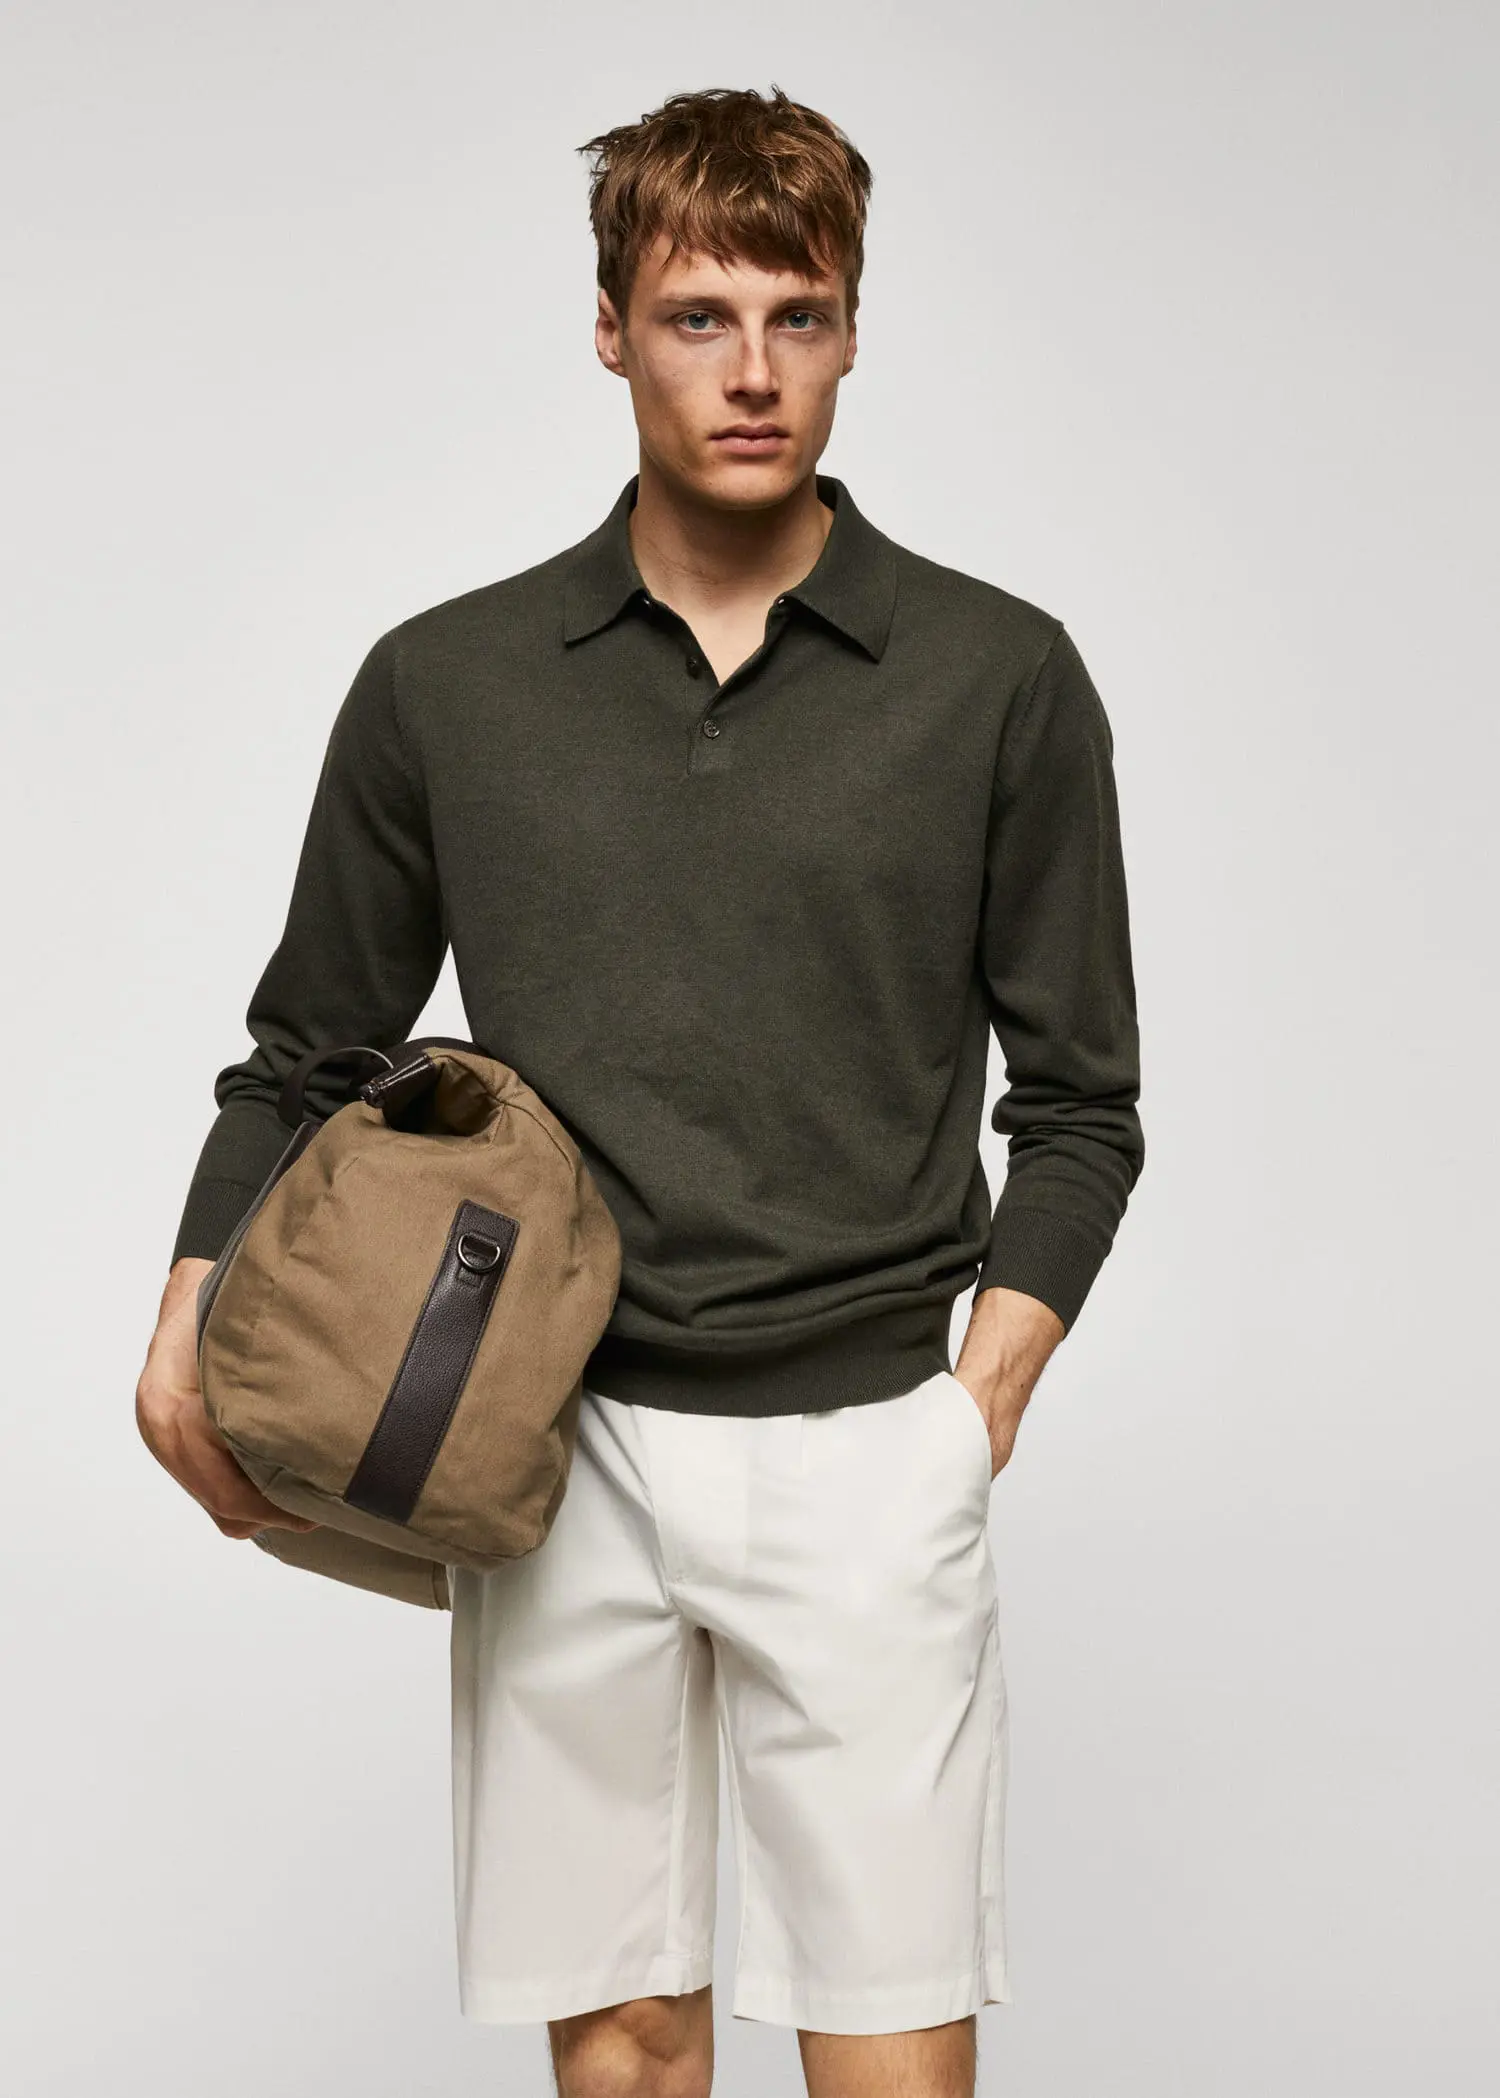 Mango Long-sleeved cotton jersey polo shirt. 1